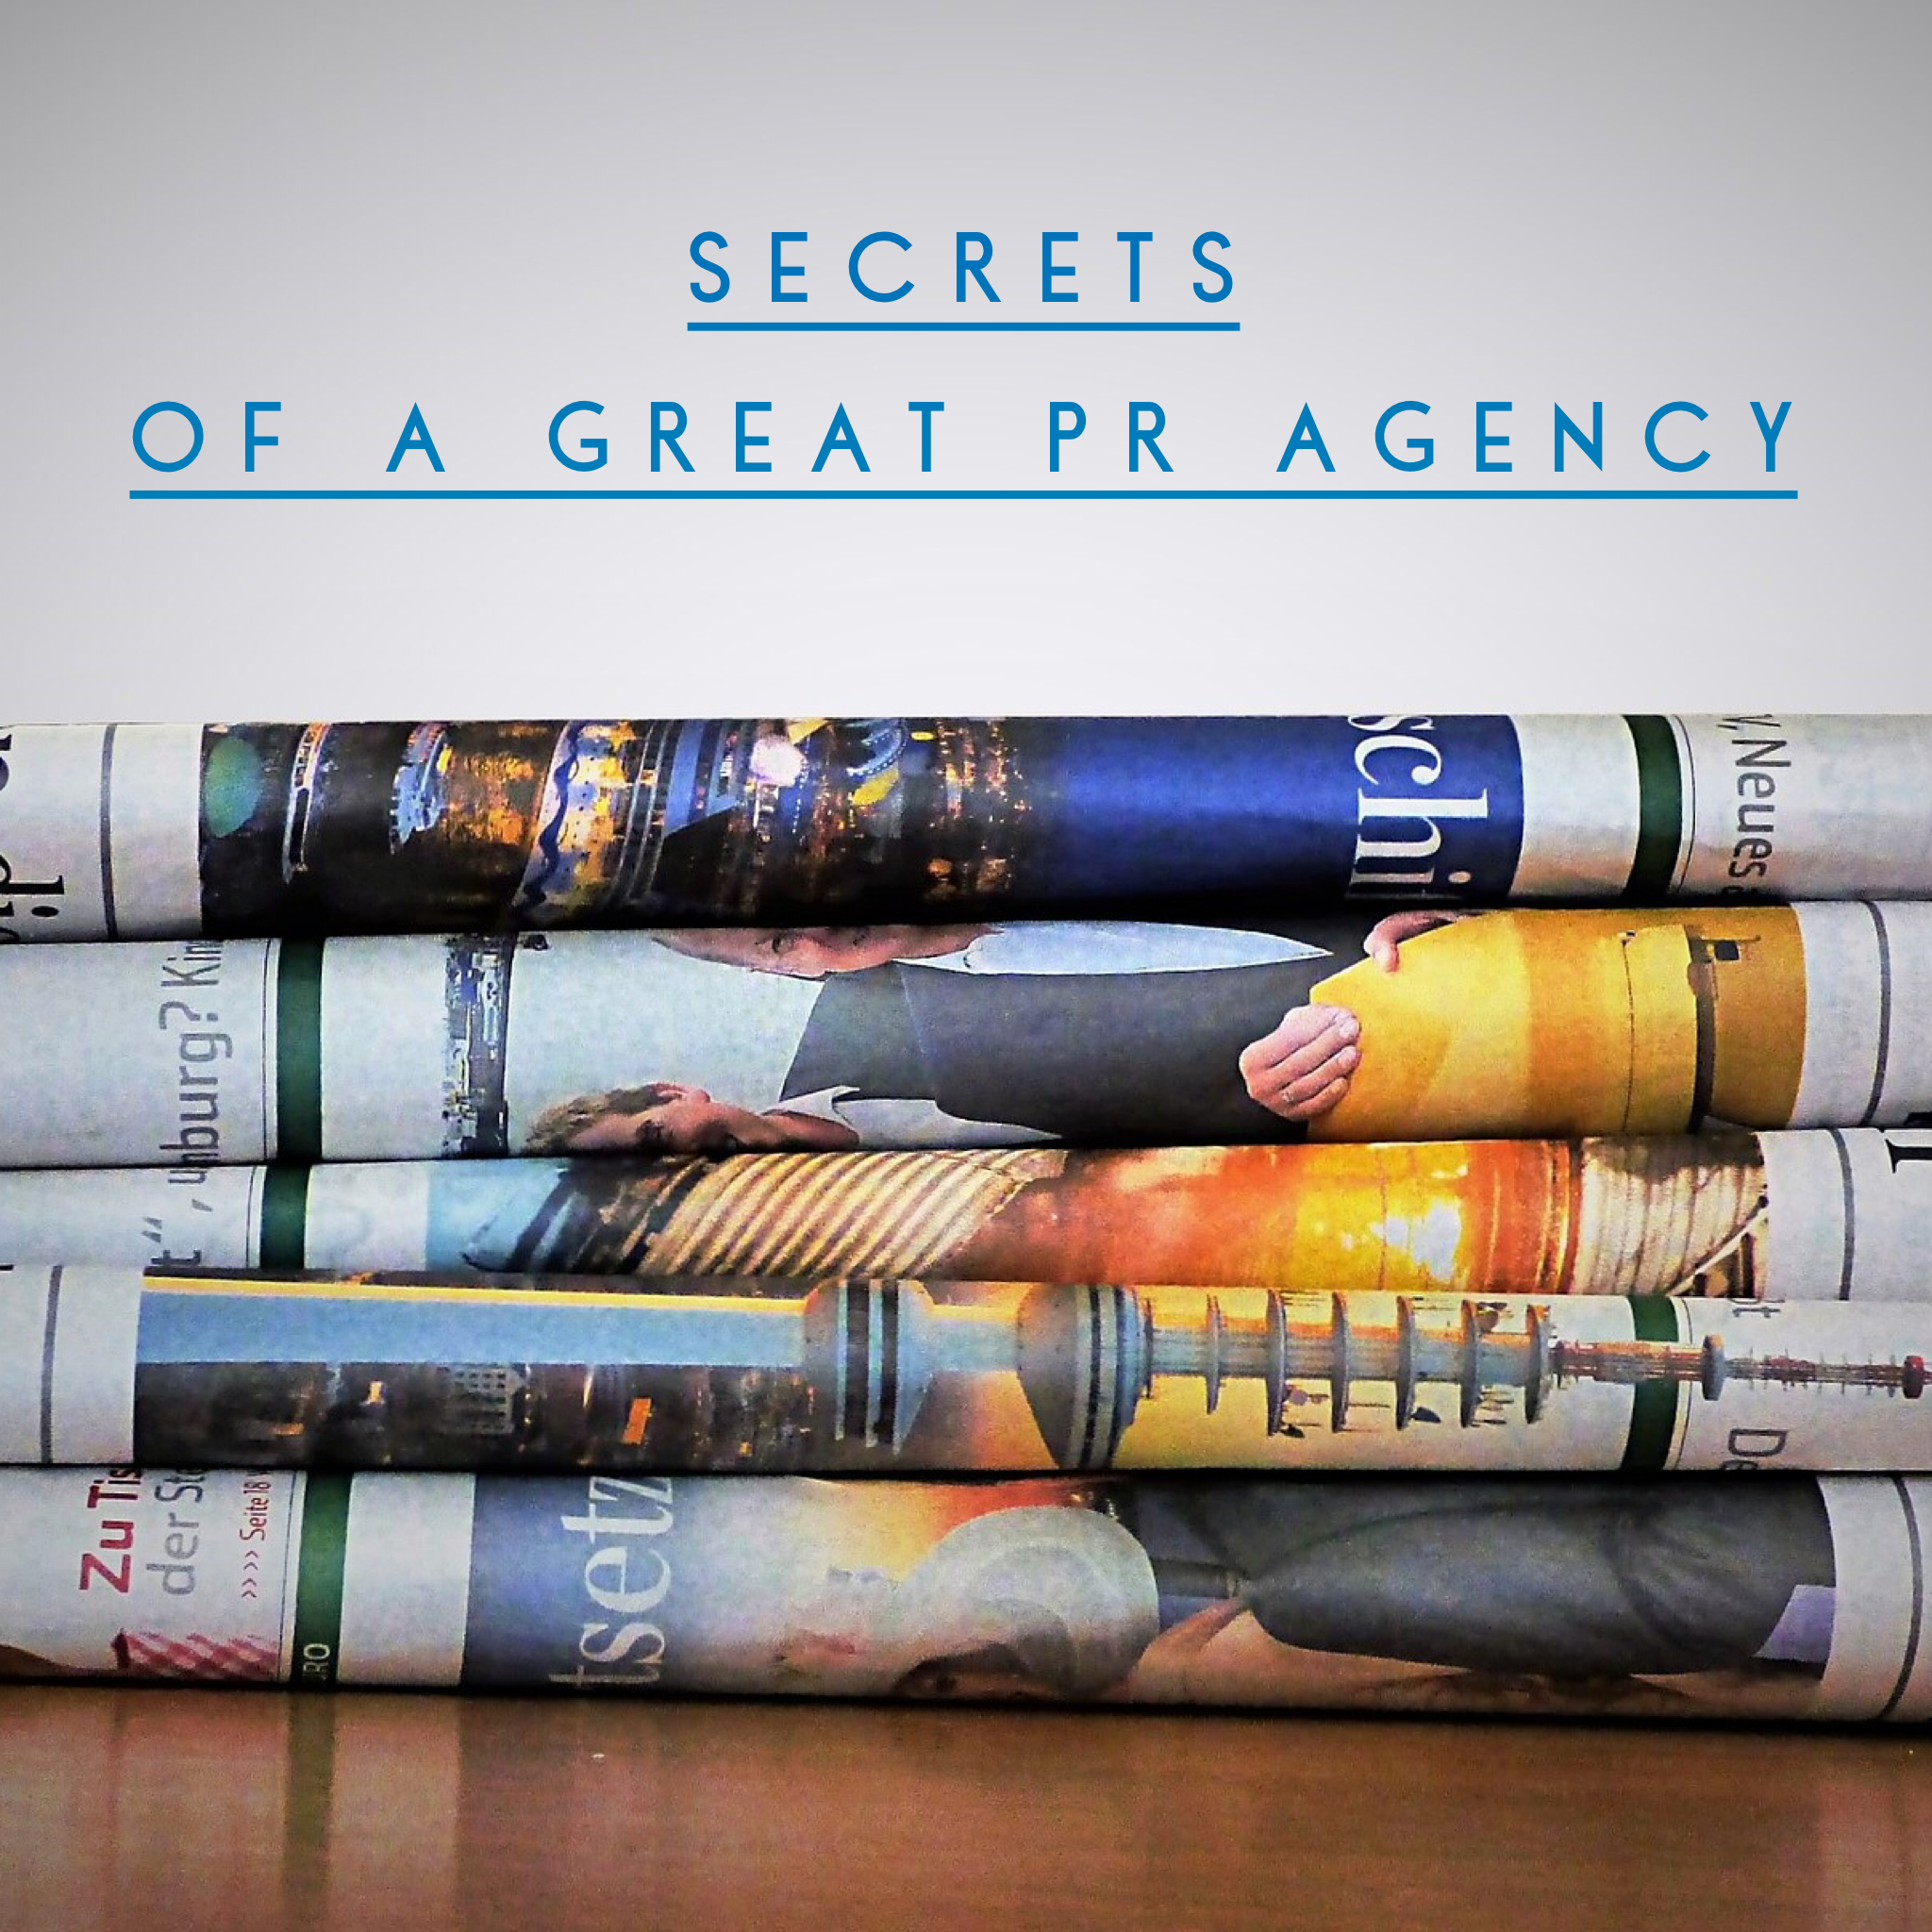 Secrets of a PR agency or PR agent, blog post by Sydney PR agency Pure Public Relations